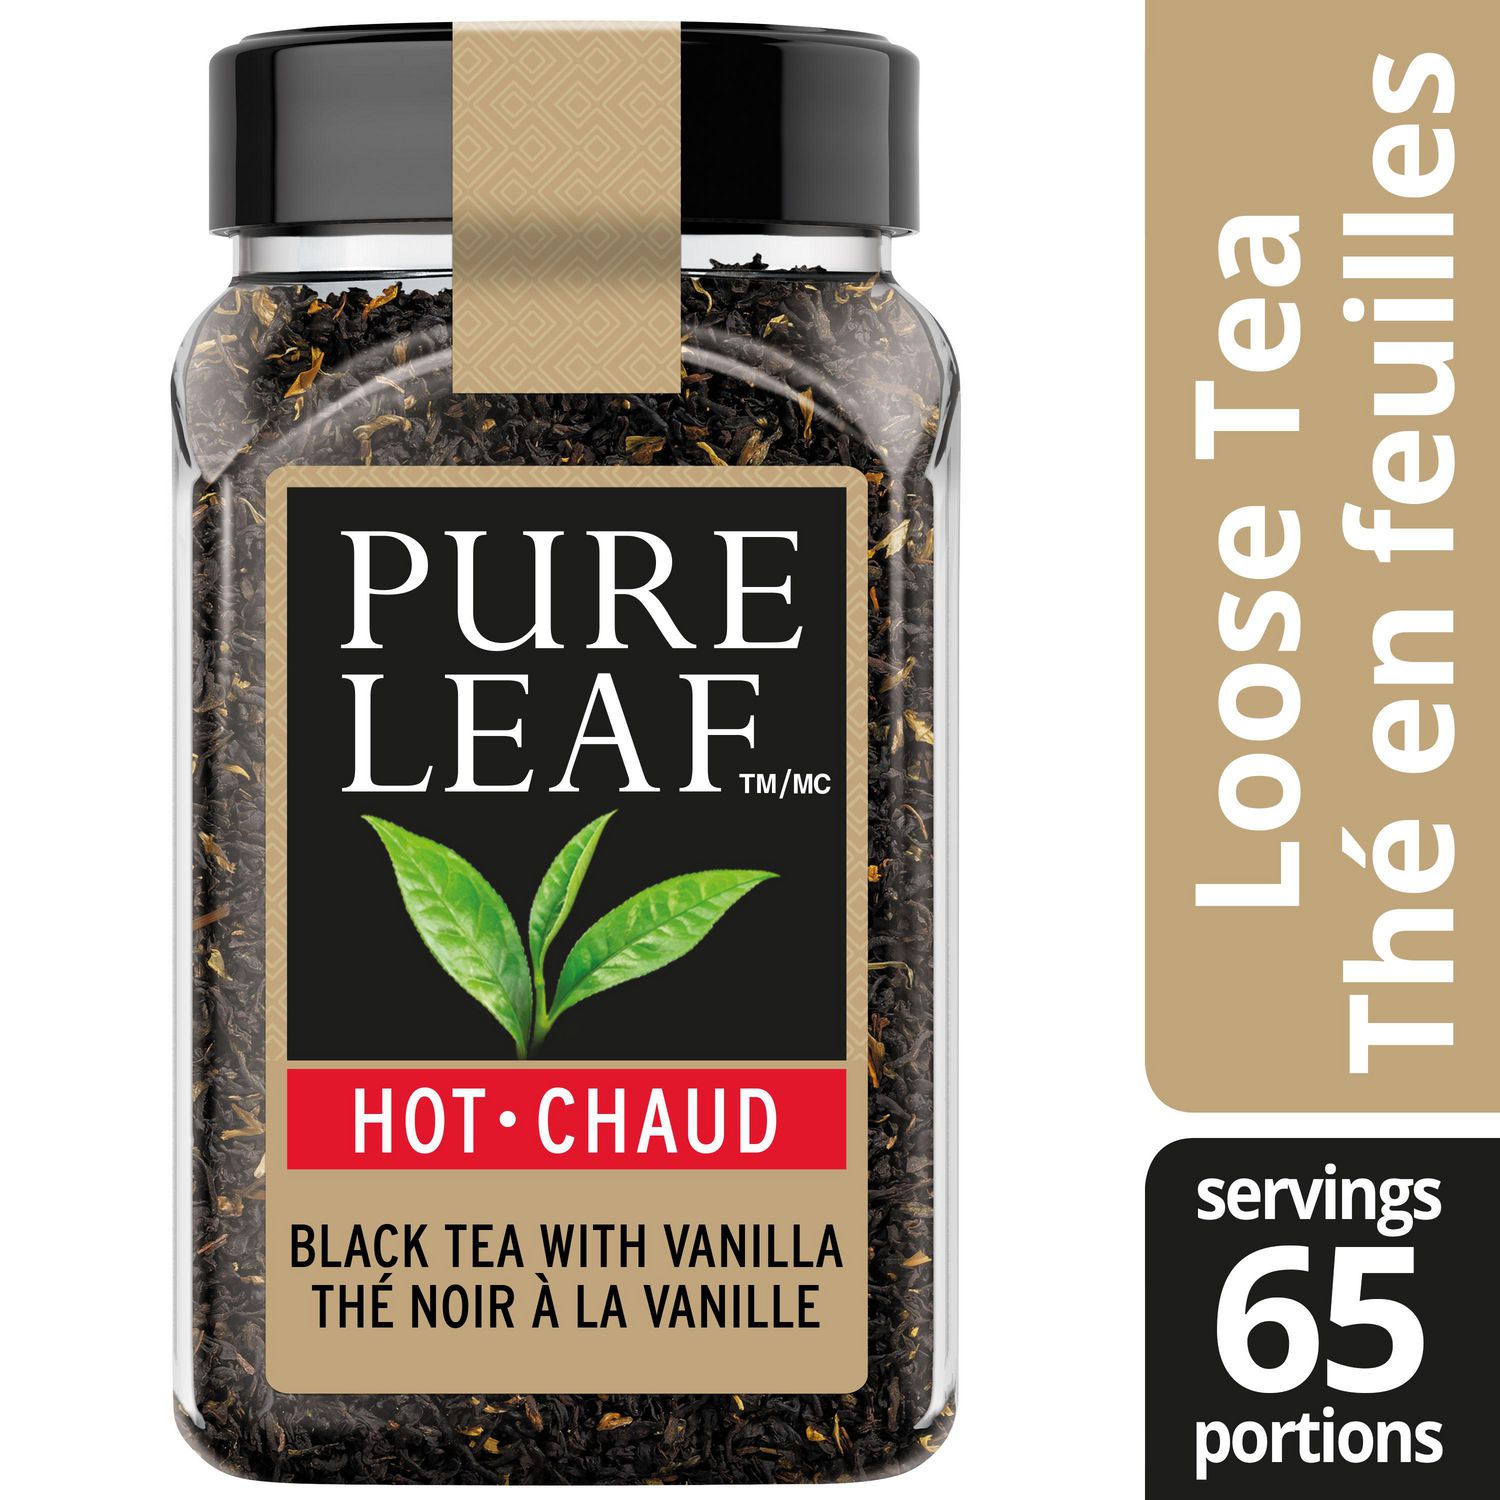 Pure Leaf Loose Leaf Tea Black Tea with Vanilla 115g Walmart Canada